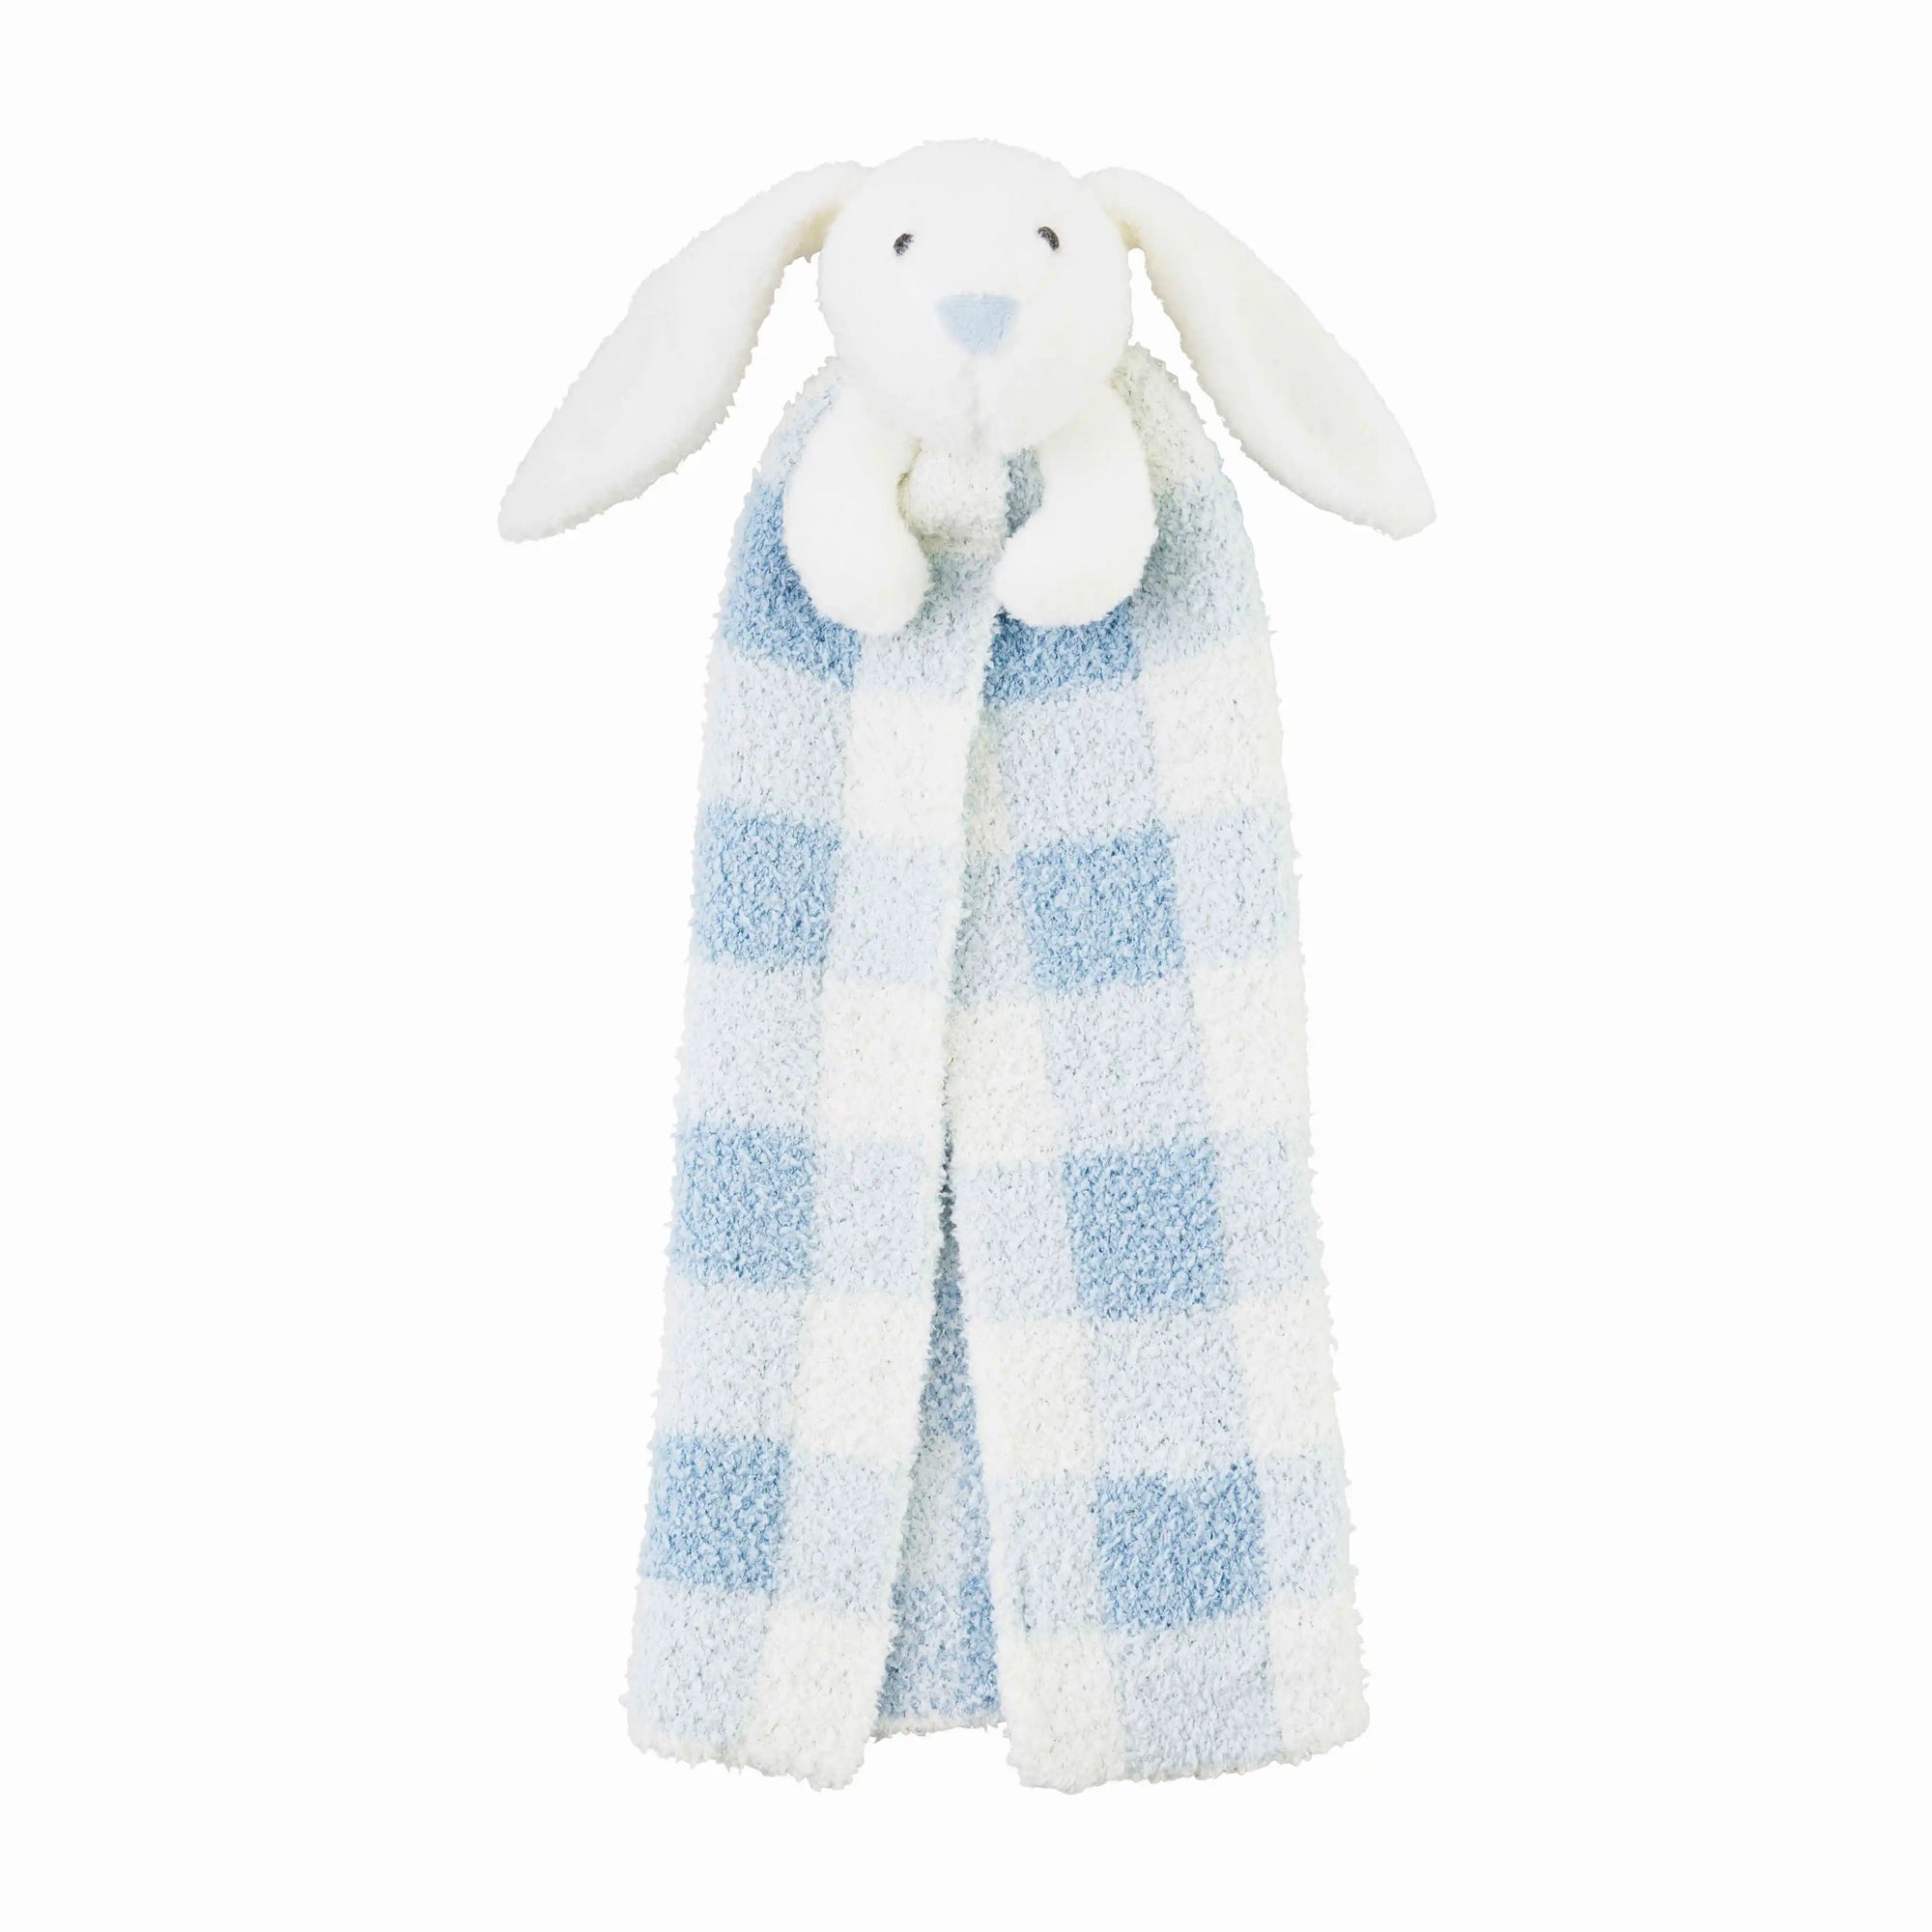 Blue Bunny Lovey Blanket by Mud Pie